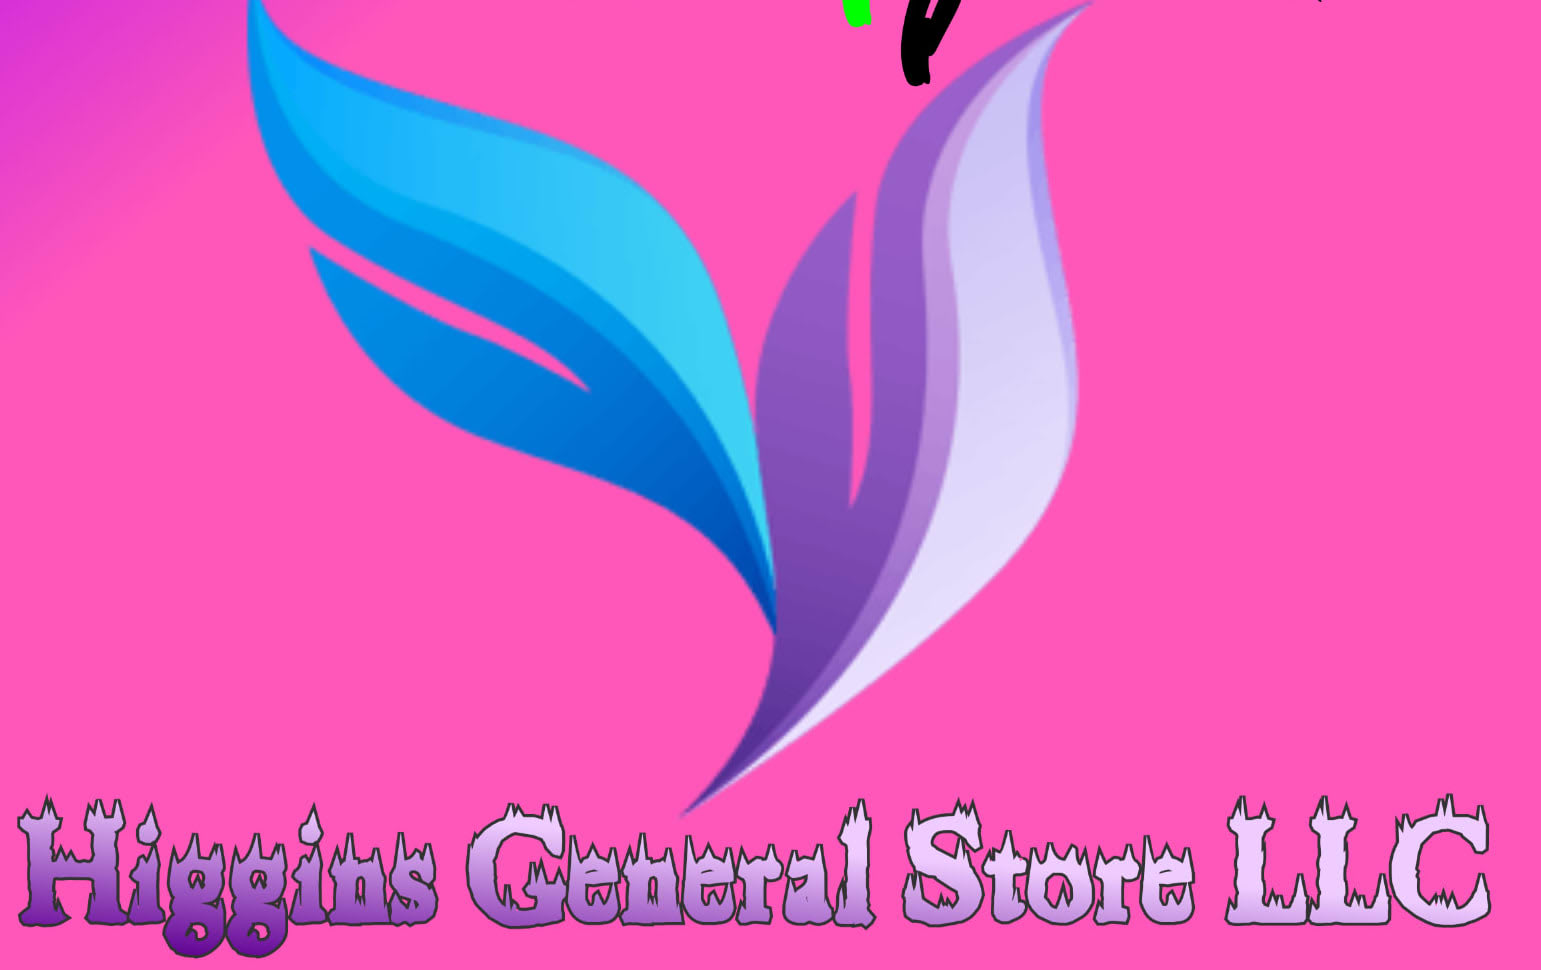 Higgins General Store